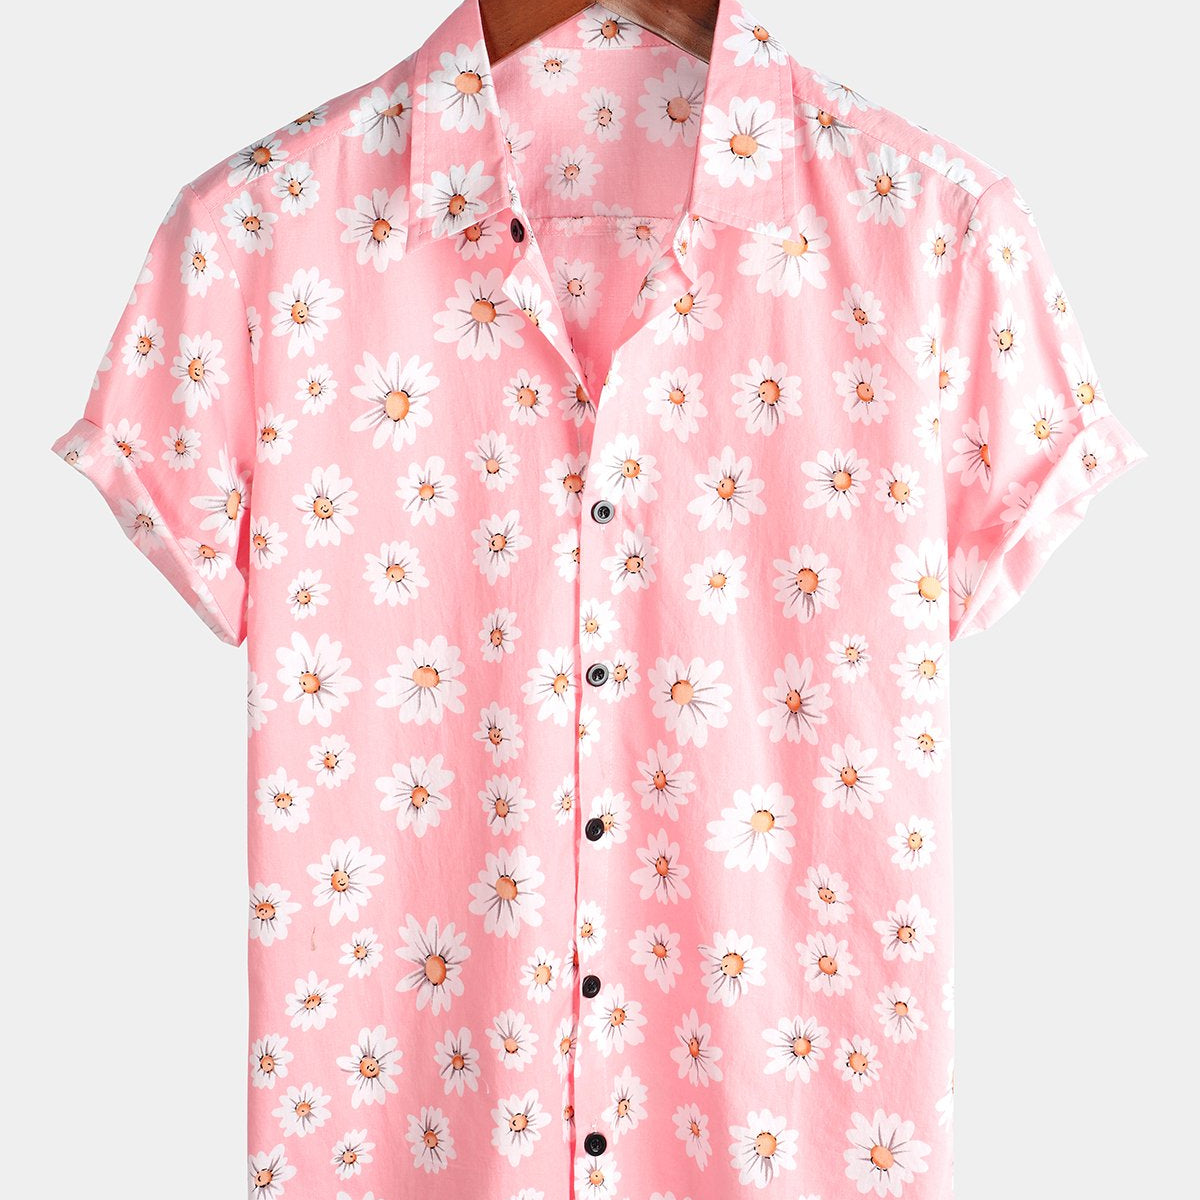 Men's Pink Floral Daisy Print Tropical Hawaii Cotton Shirt